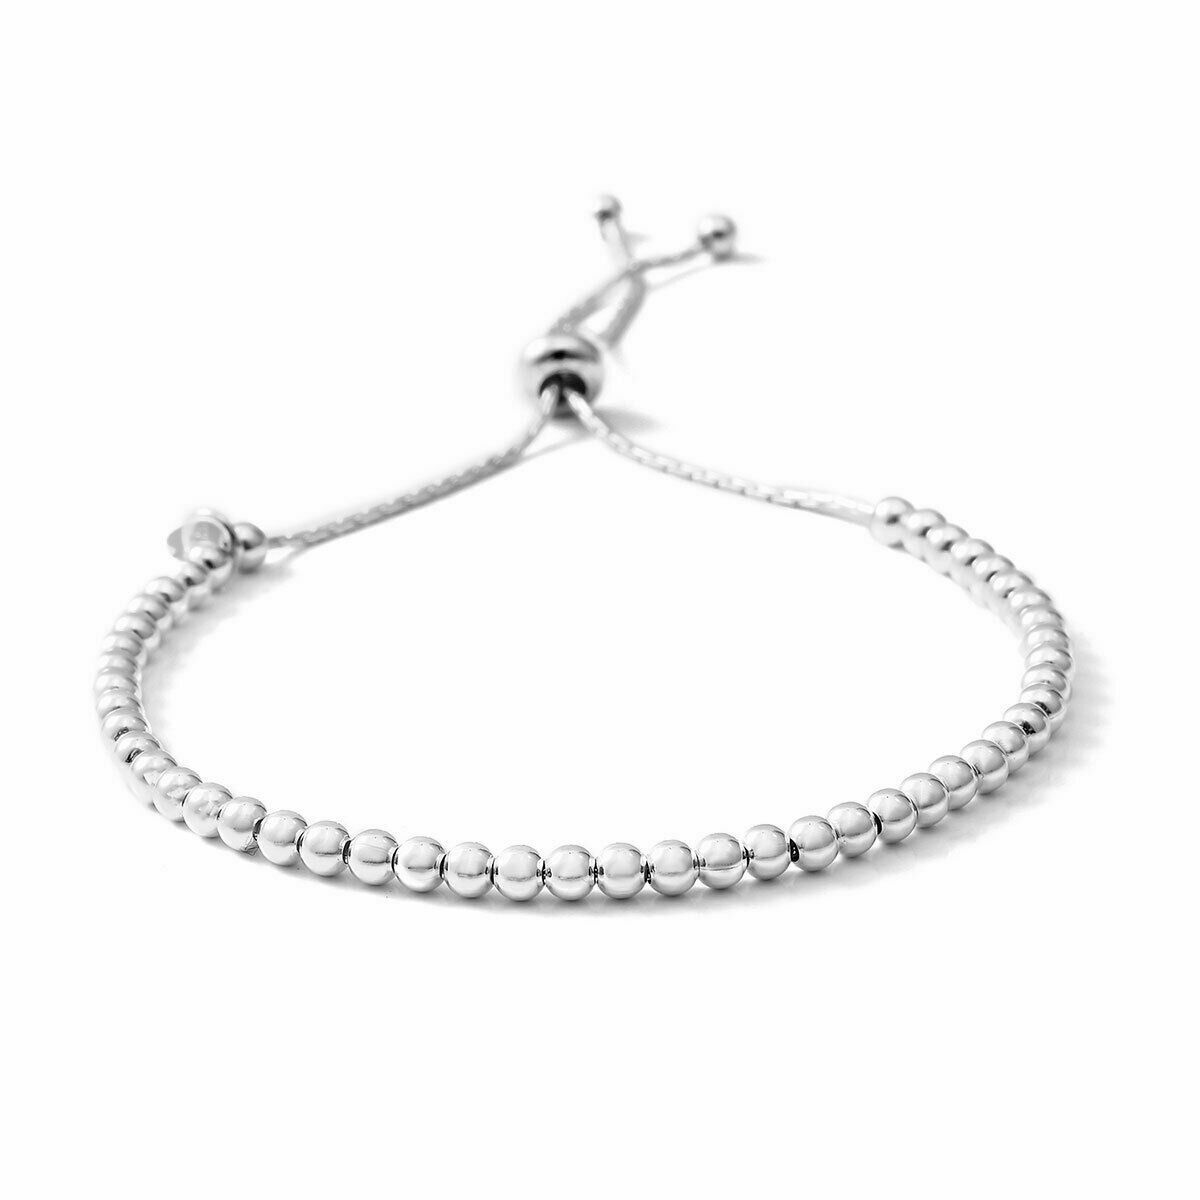 925 Sterling Silver Adjustable Bolo Bead Elegant Bracelet Jewelry Gift For Women